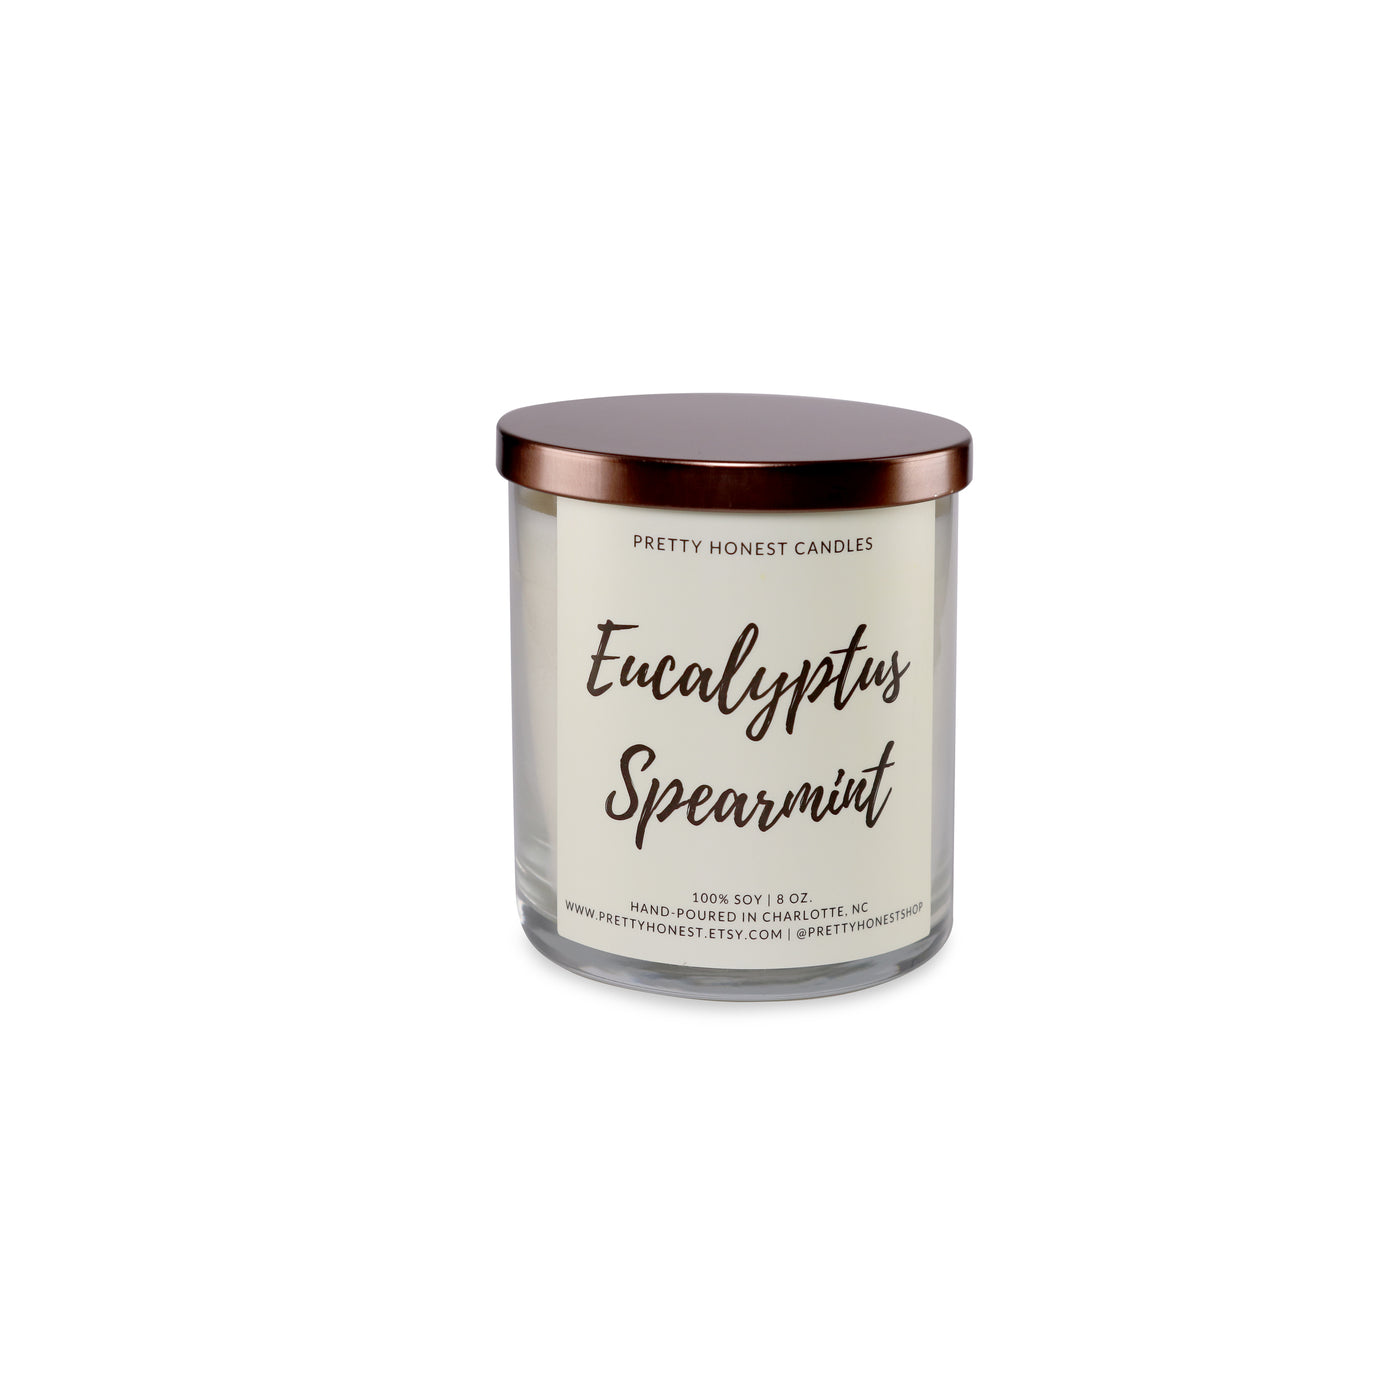 Eucalyptus Spearmint Soy Candle - Pretty Honest Candles